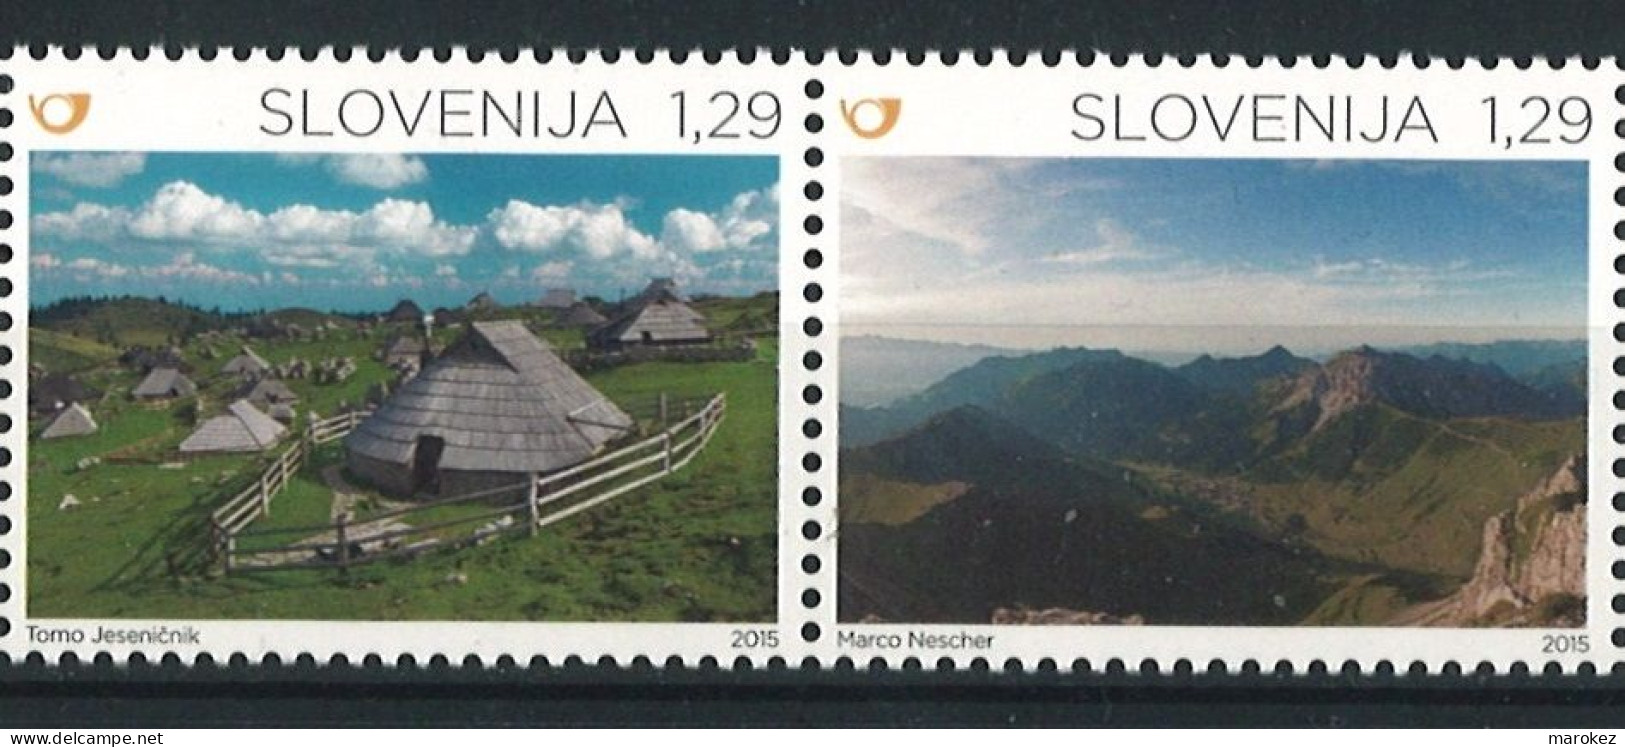 SLOVENIA 2015 Joint Issue With Liechtenstein - Alps As A Habitat Pair **MNH Michel # 1164,1165 - Slovenia